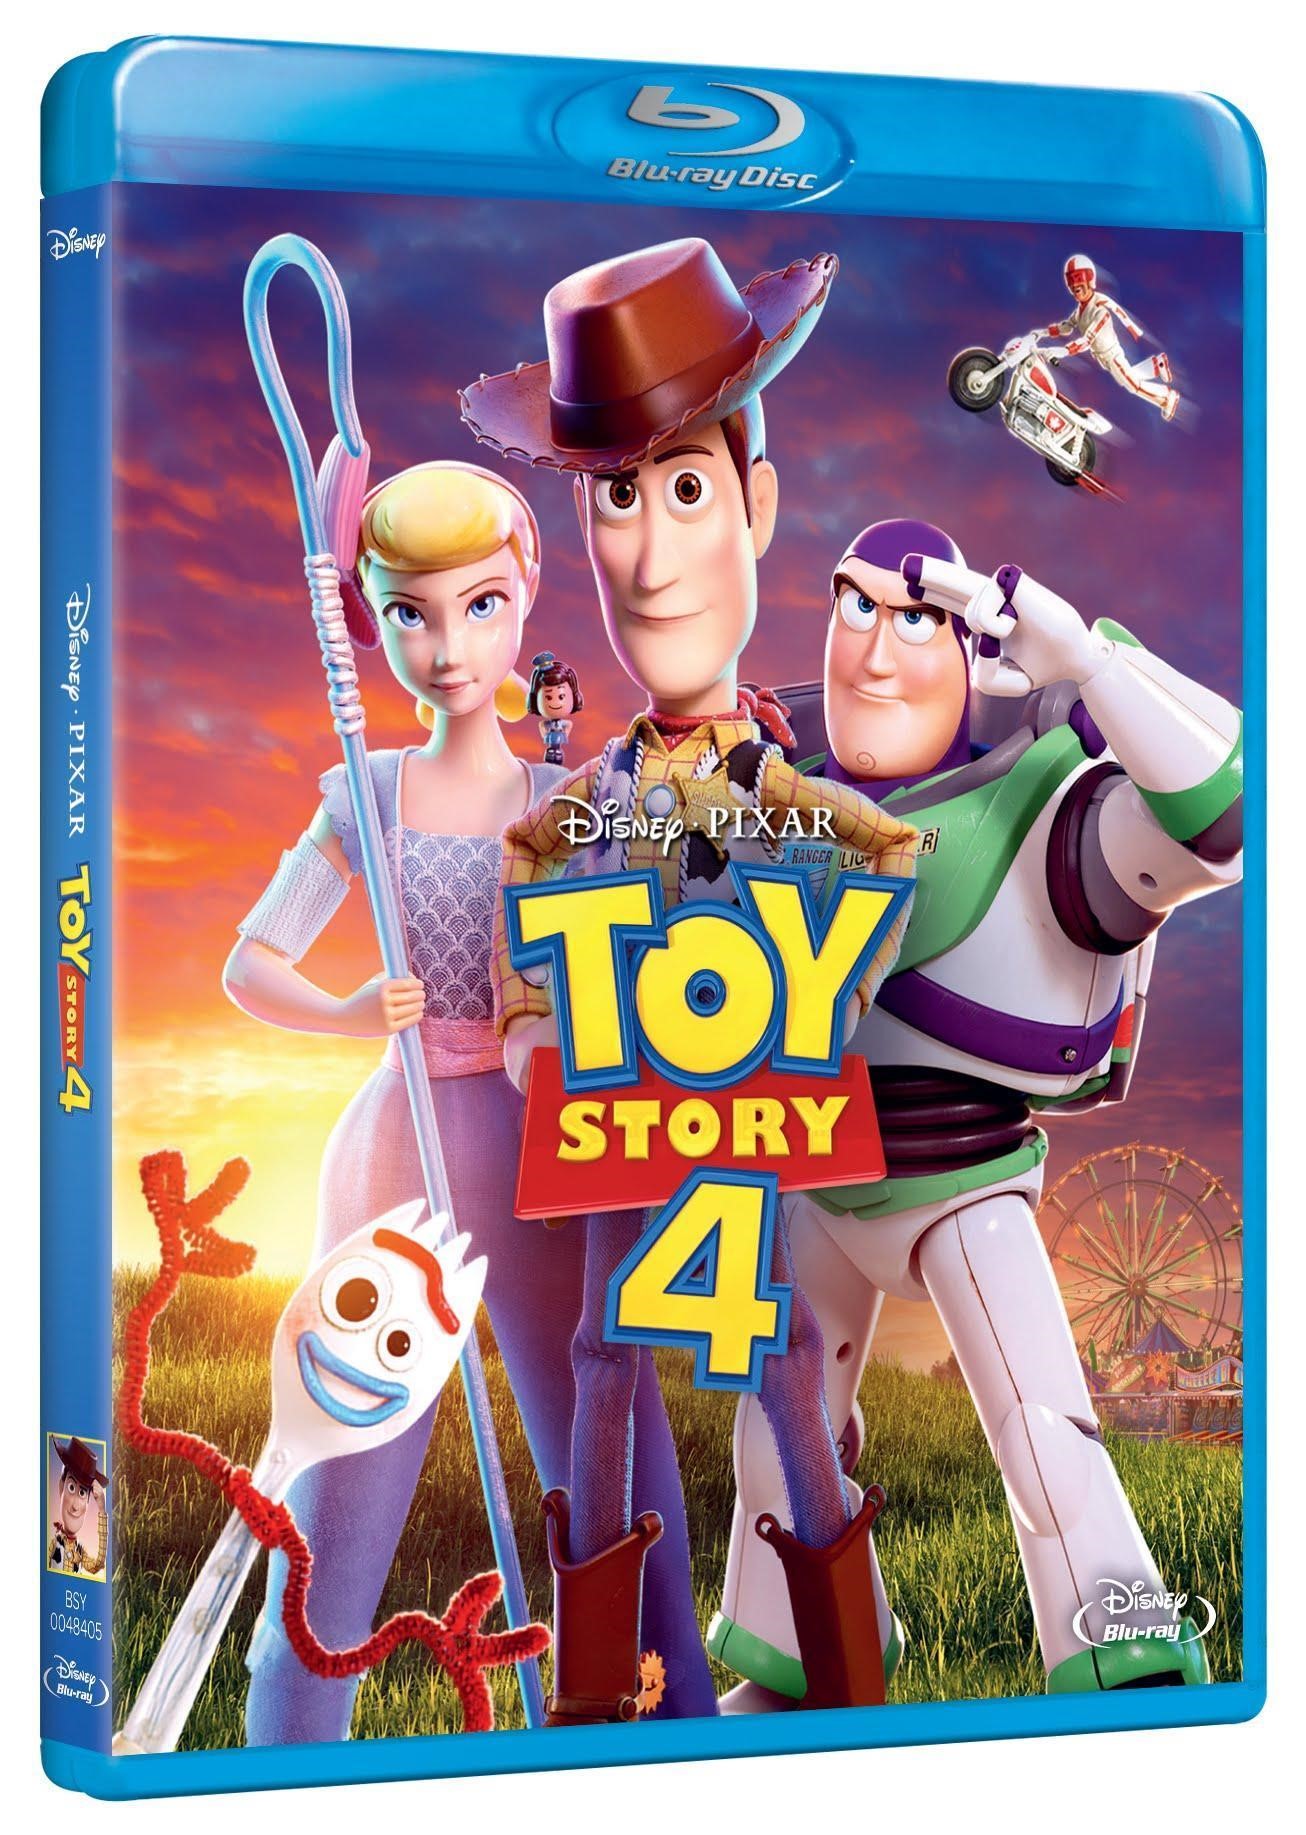 'Toy Story 4', ya está disponible en DVD, Blu-ray, y steelbook